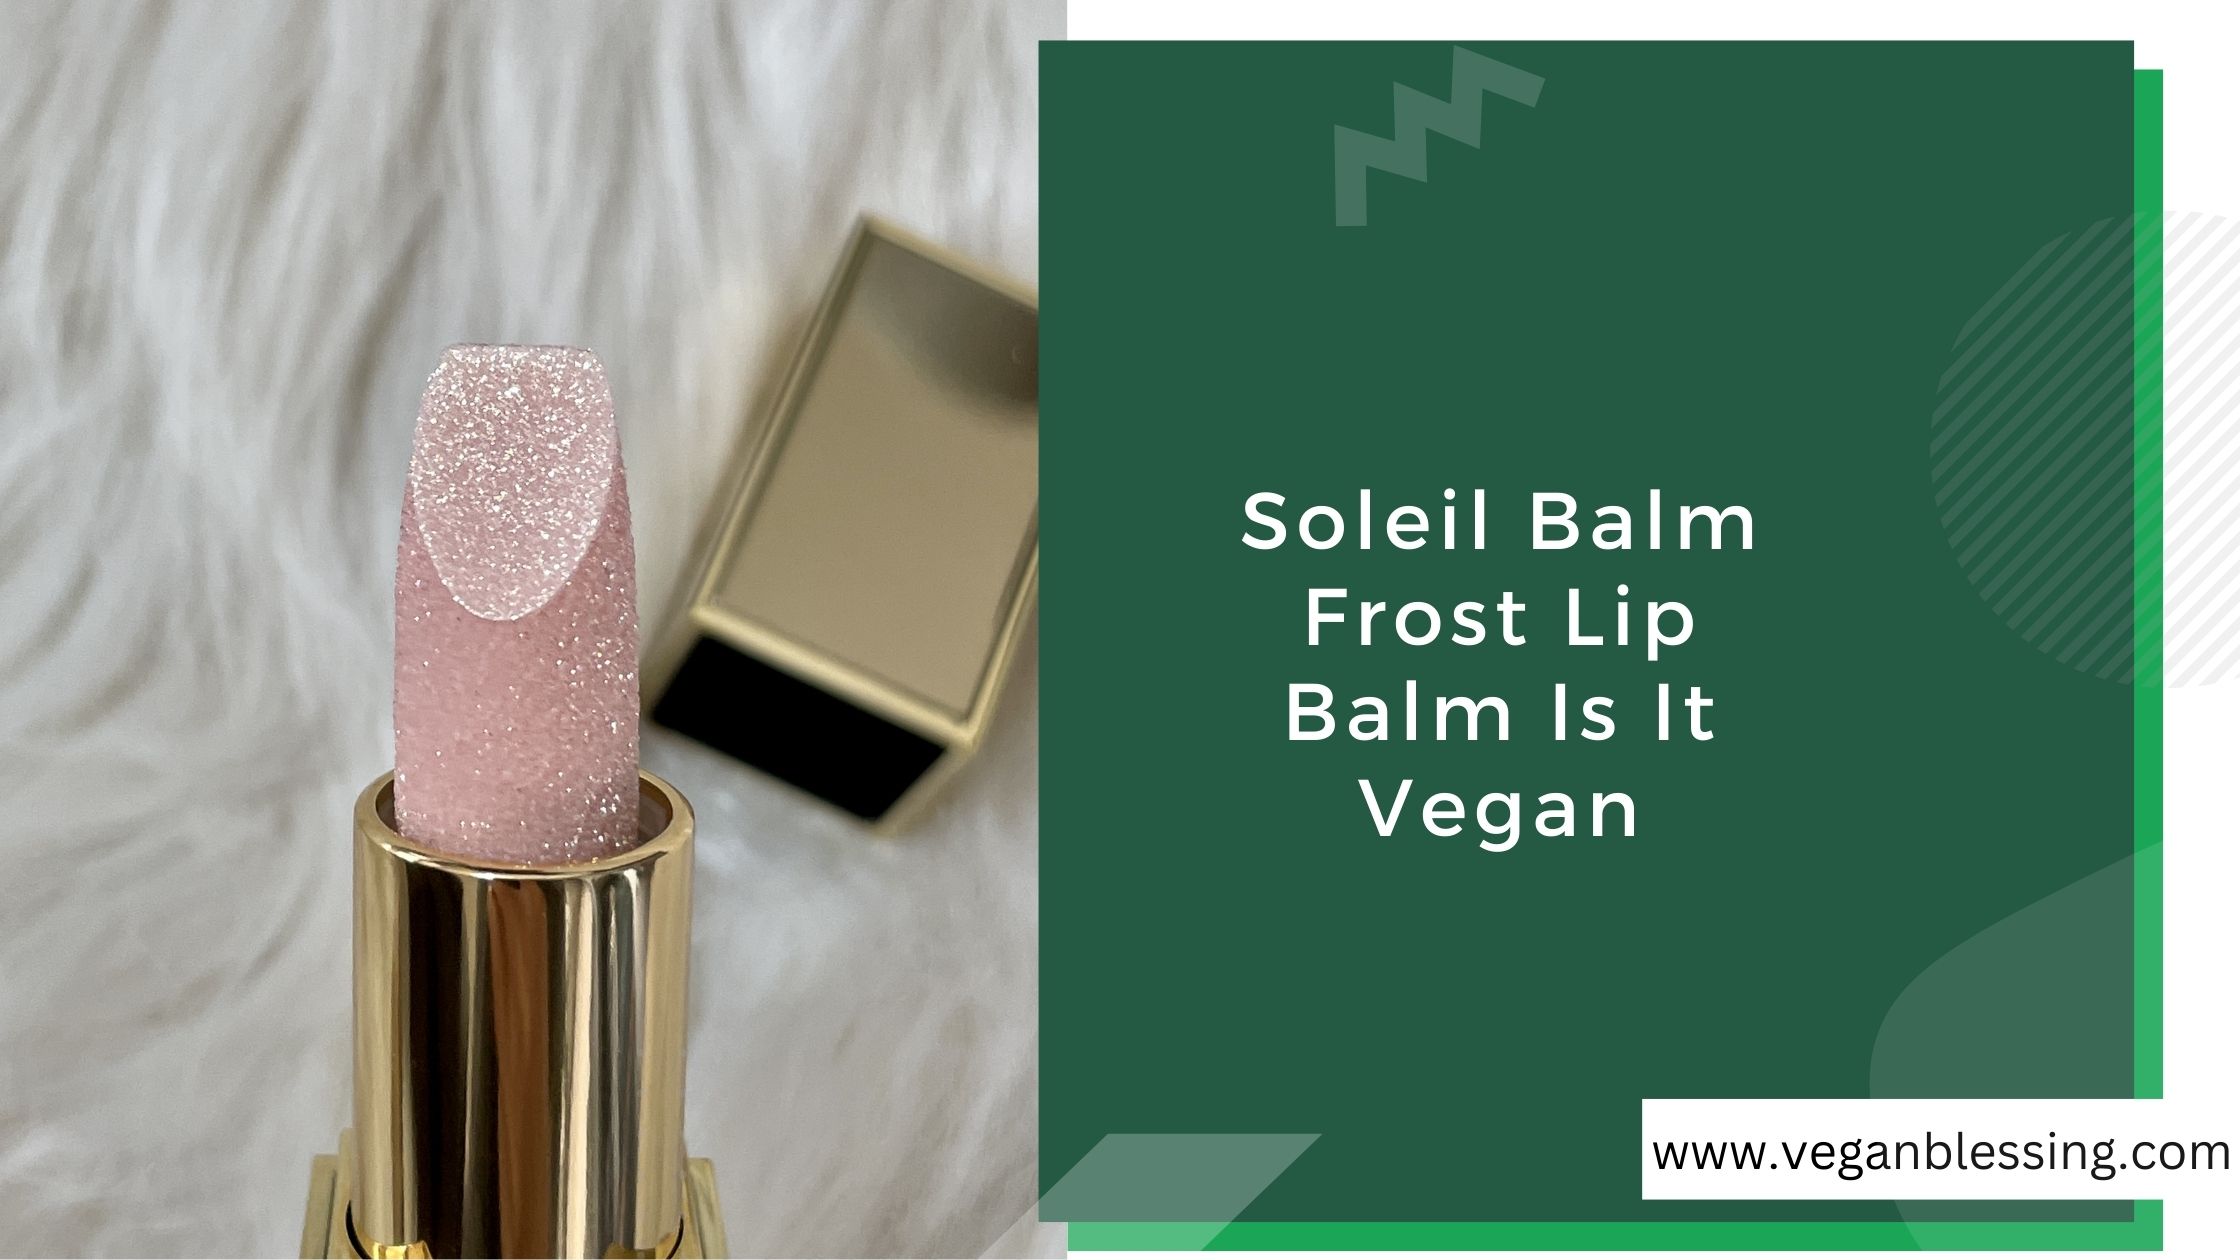 Soleil Balm Frost Lip Balm Is It Vegan Soleil Balm Frost Lip Balm Is It Vegan